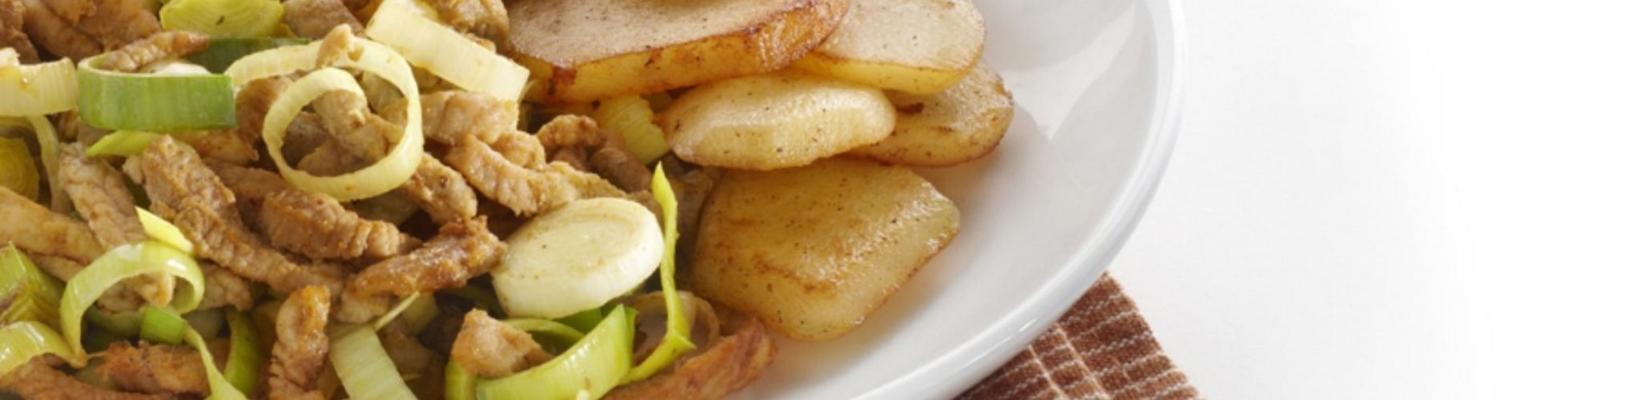 fried potatoes with shawarma